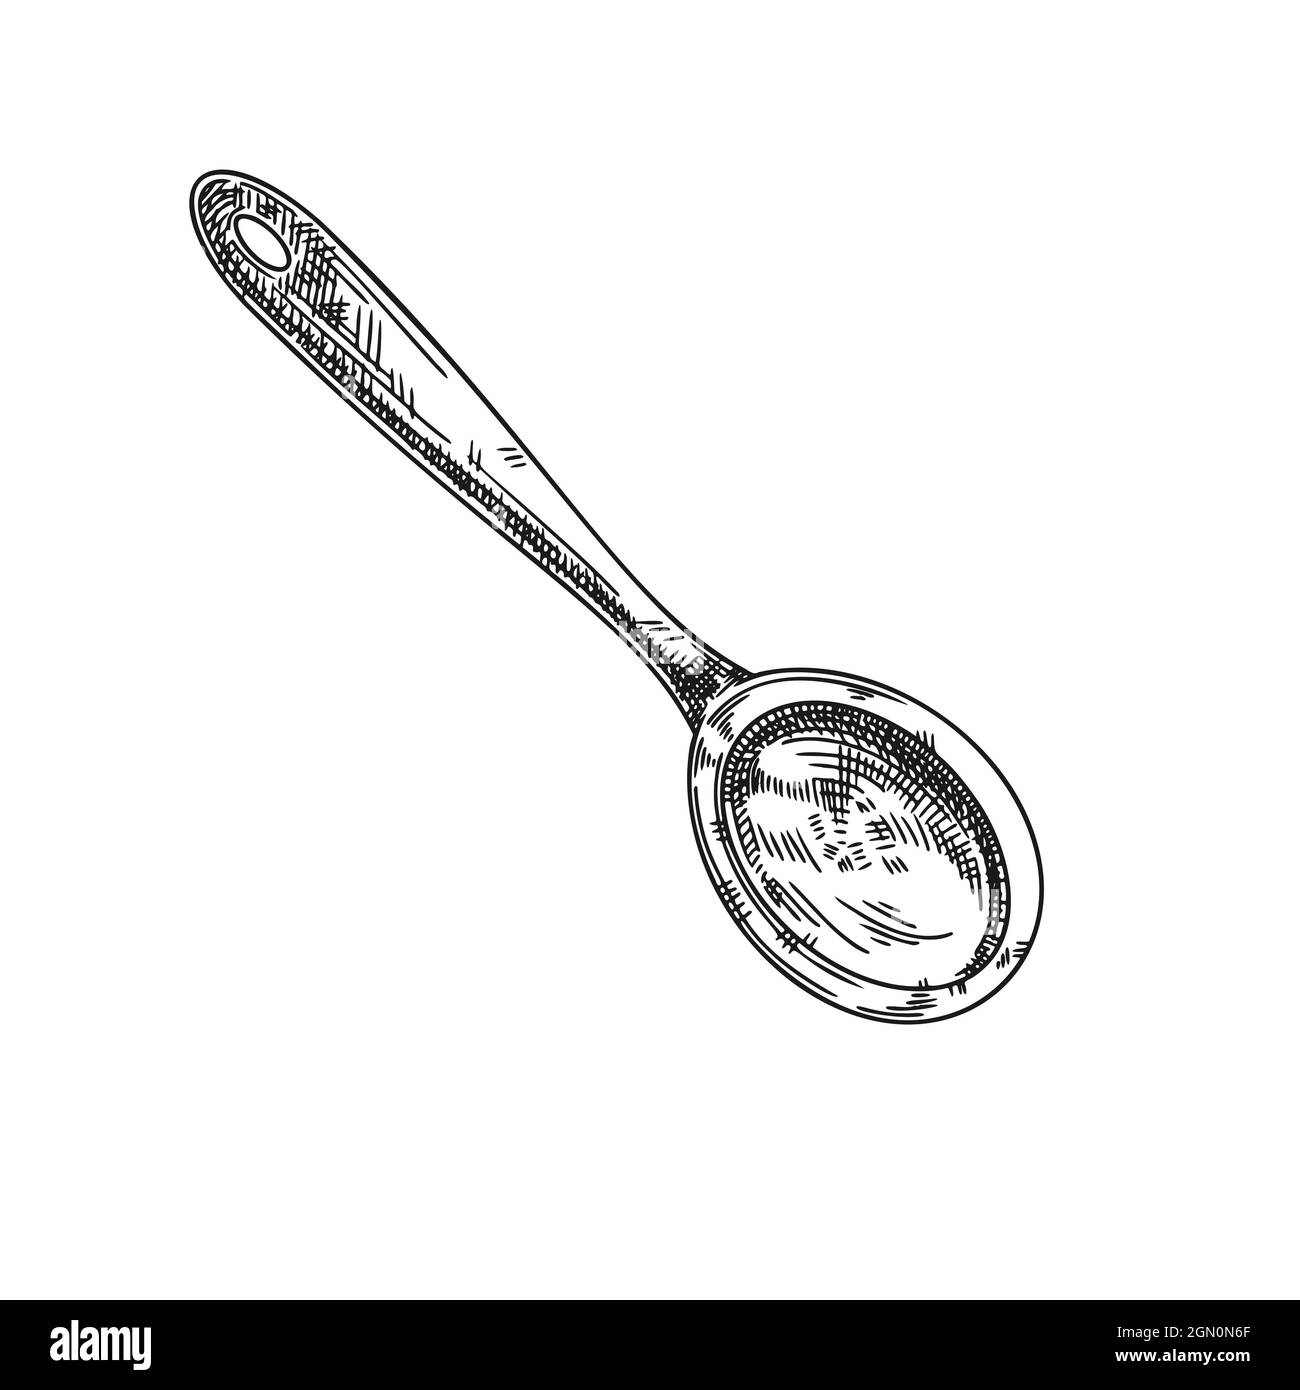 6,795 Wooden Spoon Drawing Images, Stock Photos & Vectors | Shutterstock